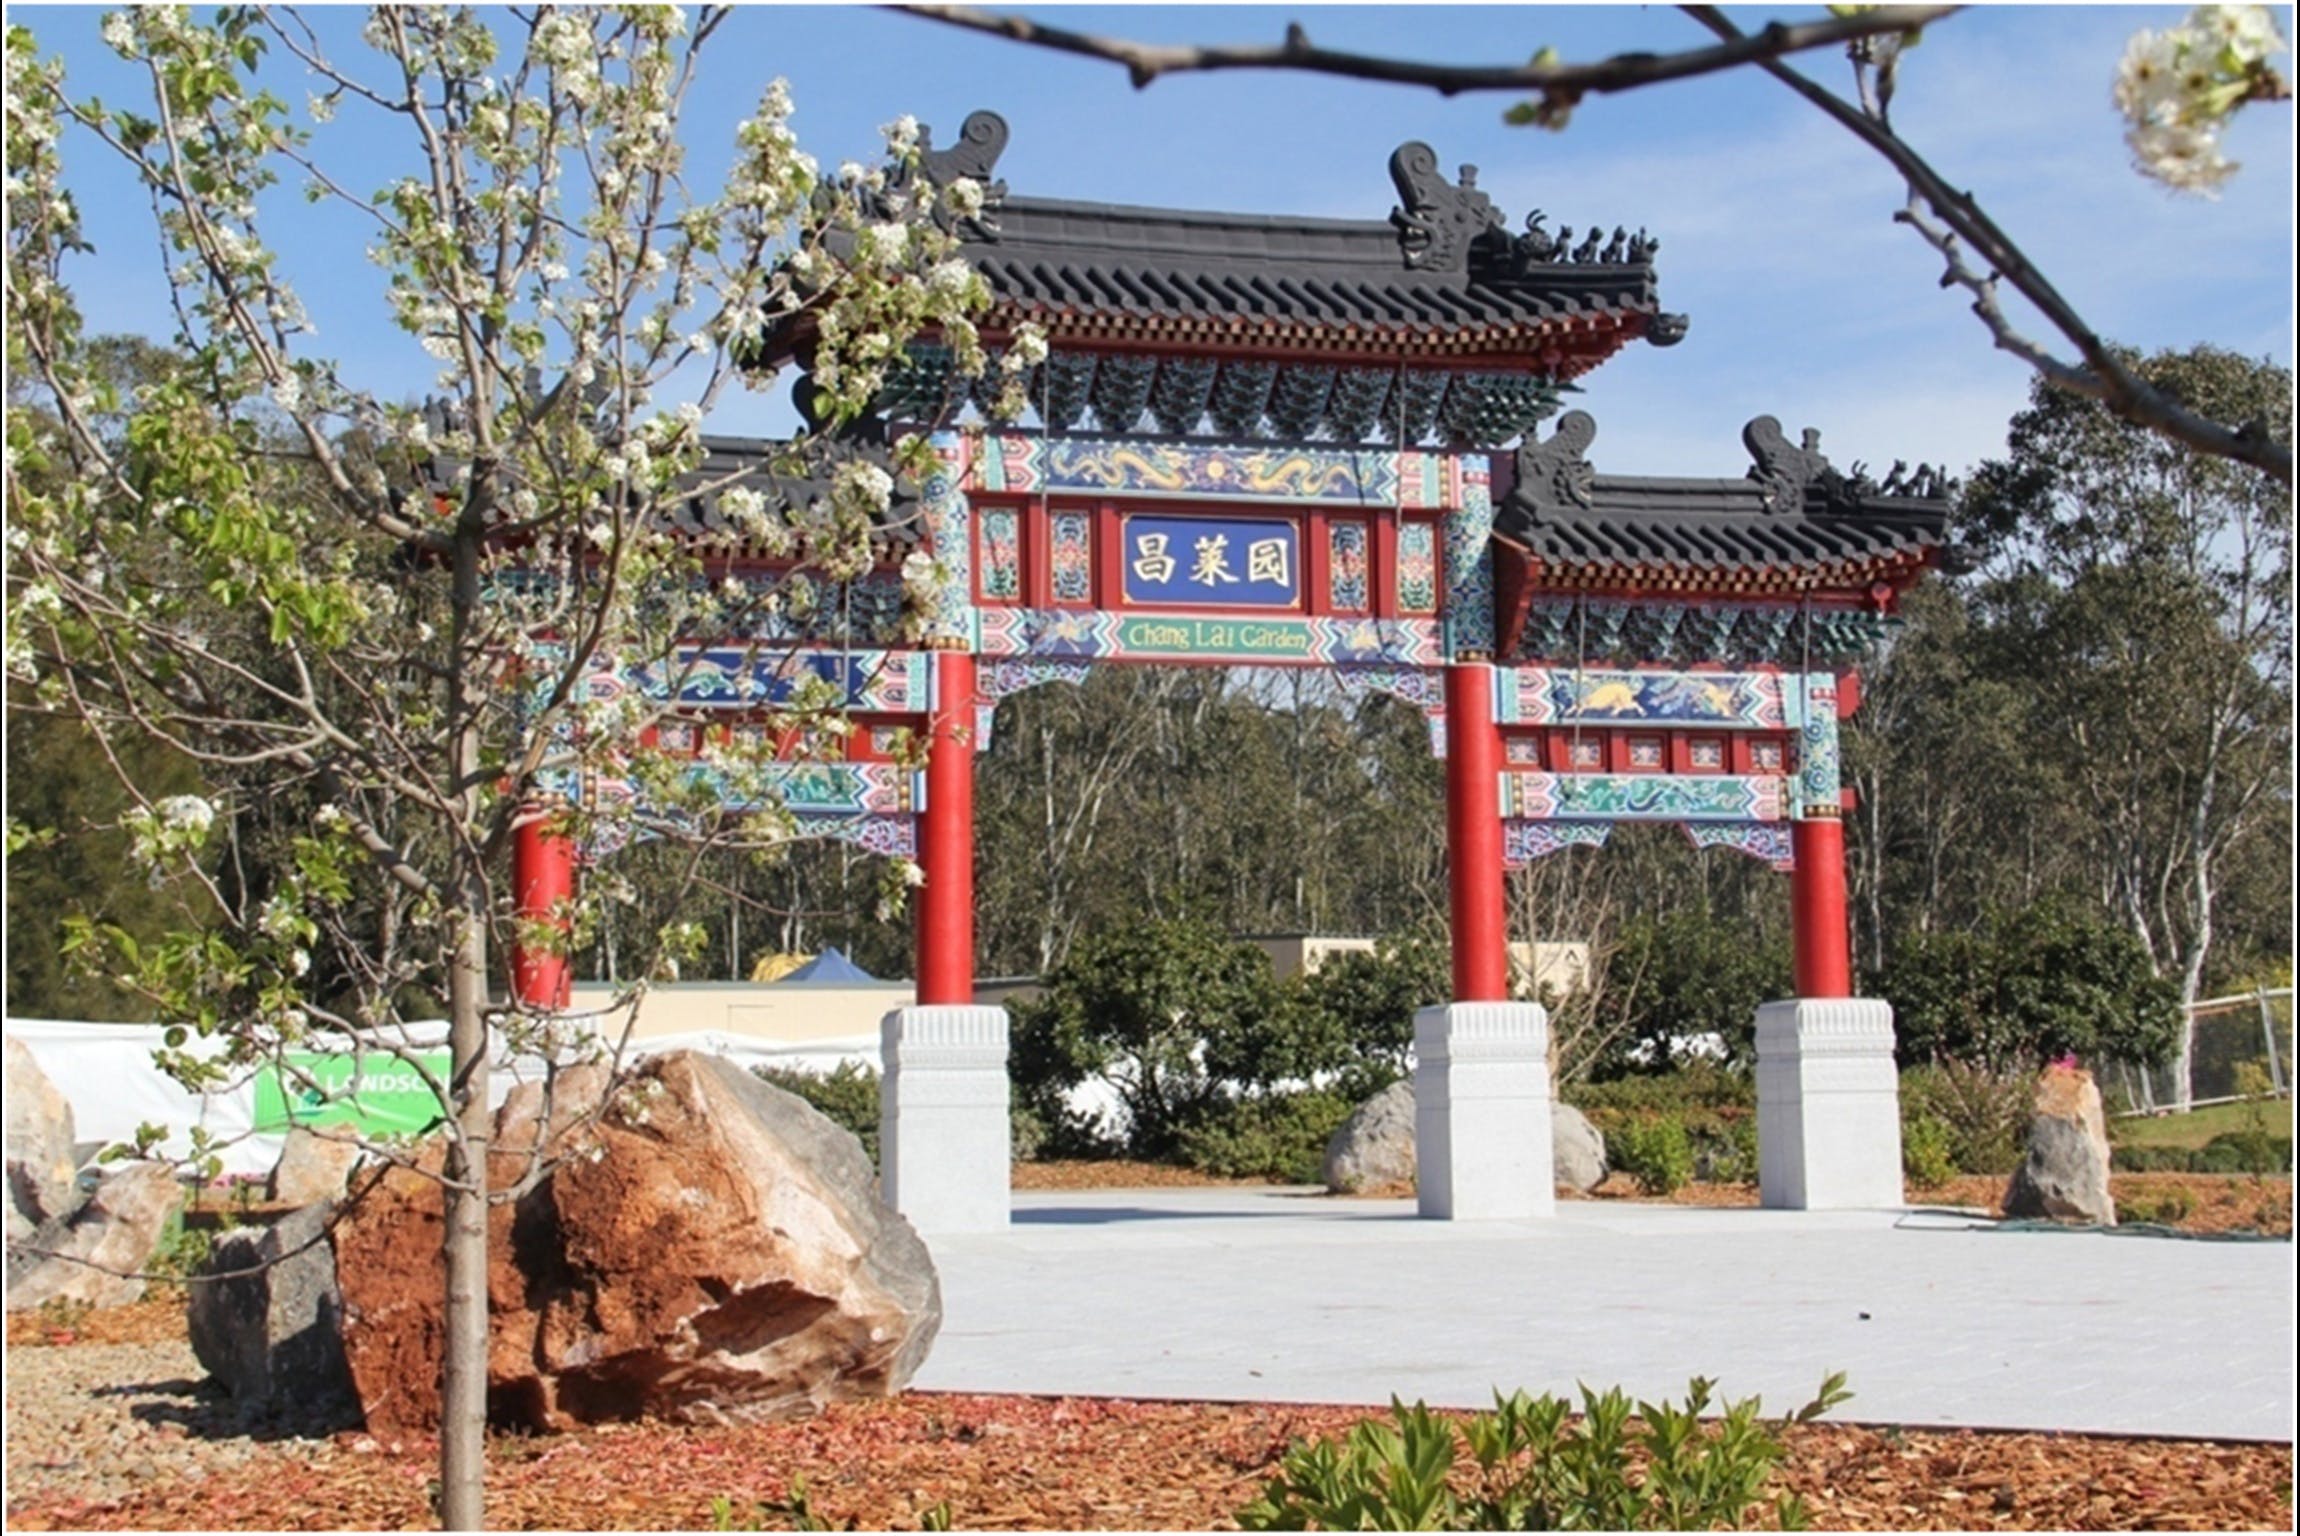 Chang Lai Yuan Chinese Gardens Logo and Images